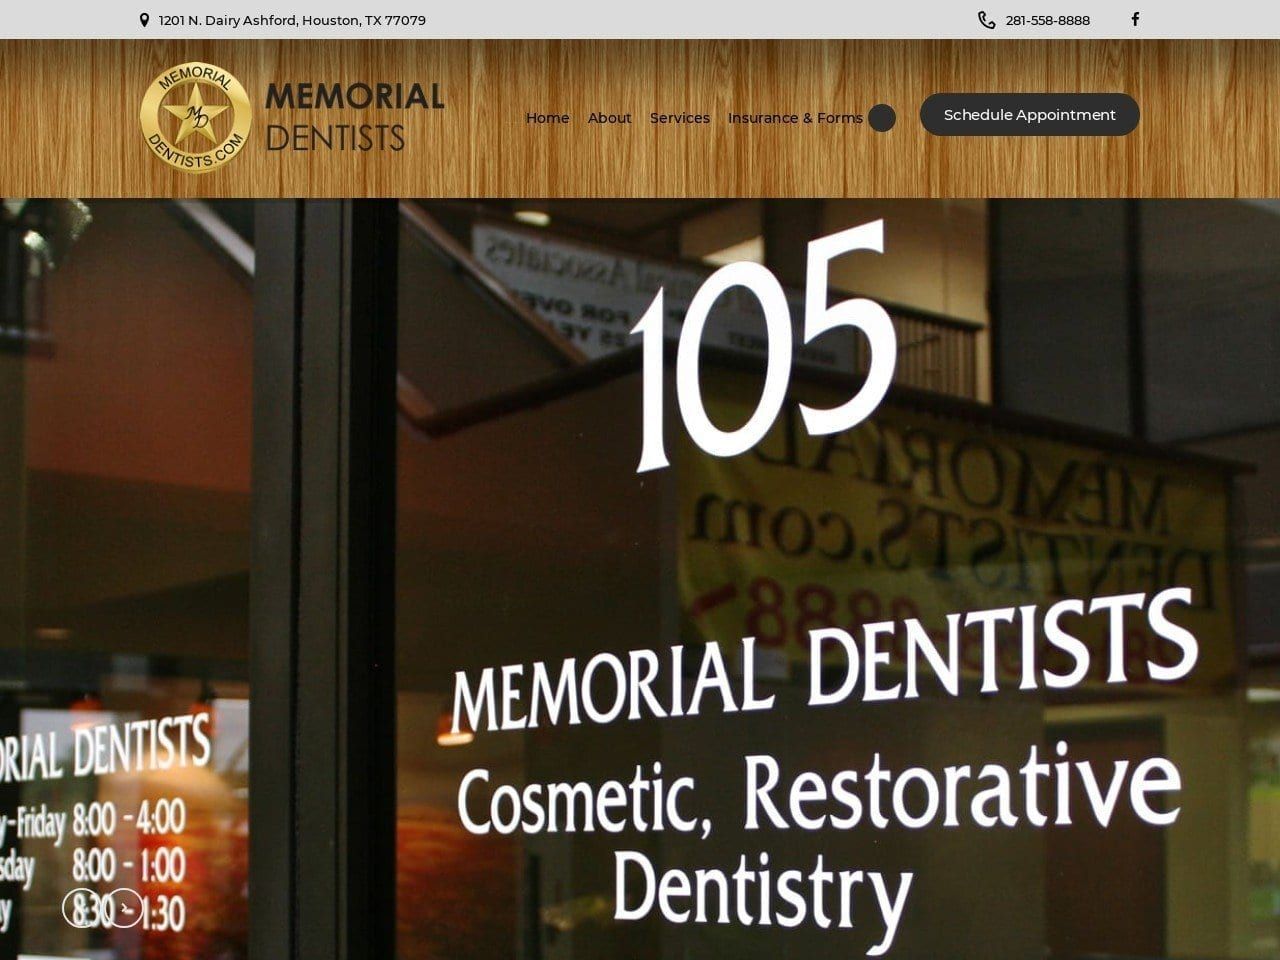 Memorial Dentist Website Screenshot from memorialdentists.com